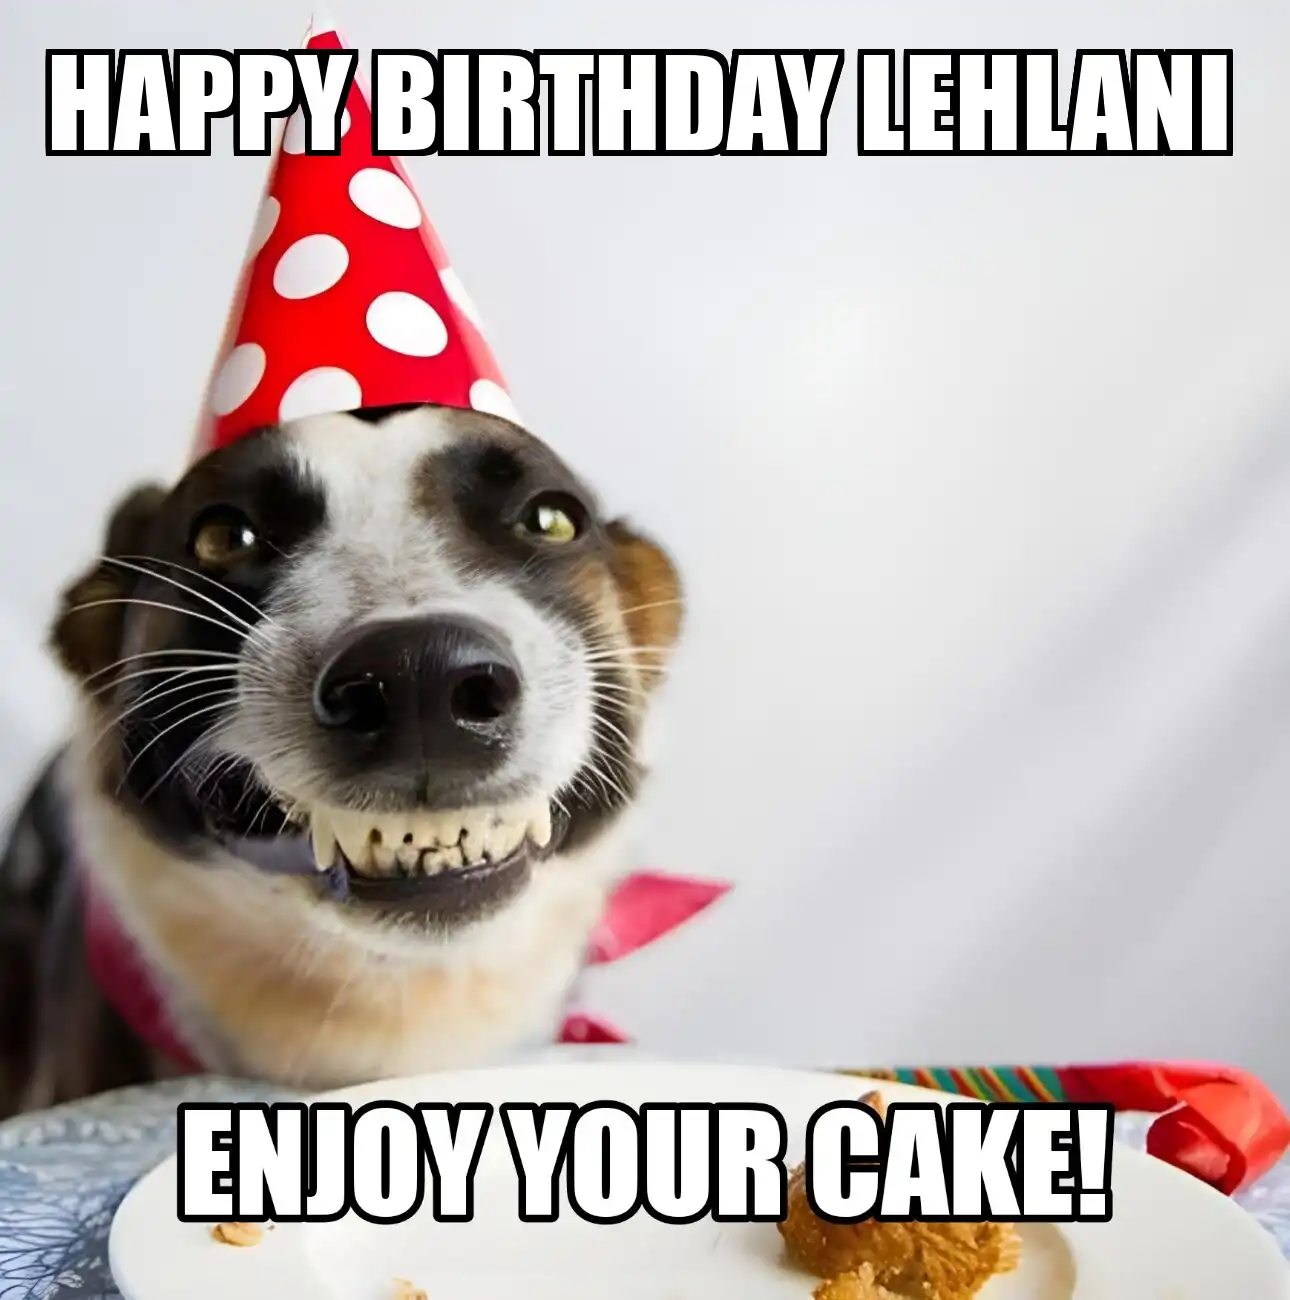 Happy Birthday Lehlani Enjoy Your Cake Dog Meme